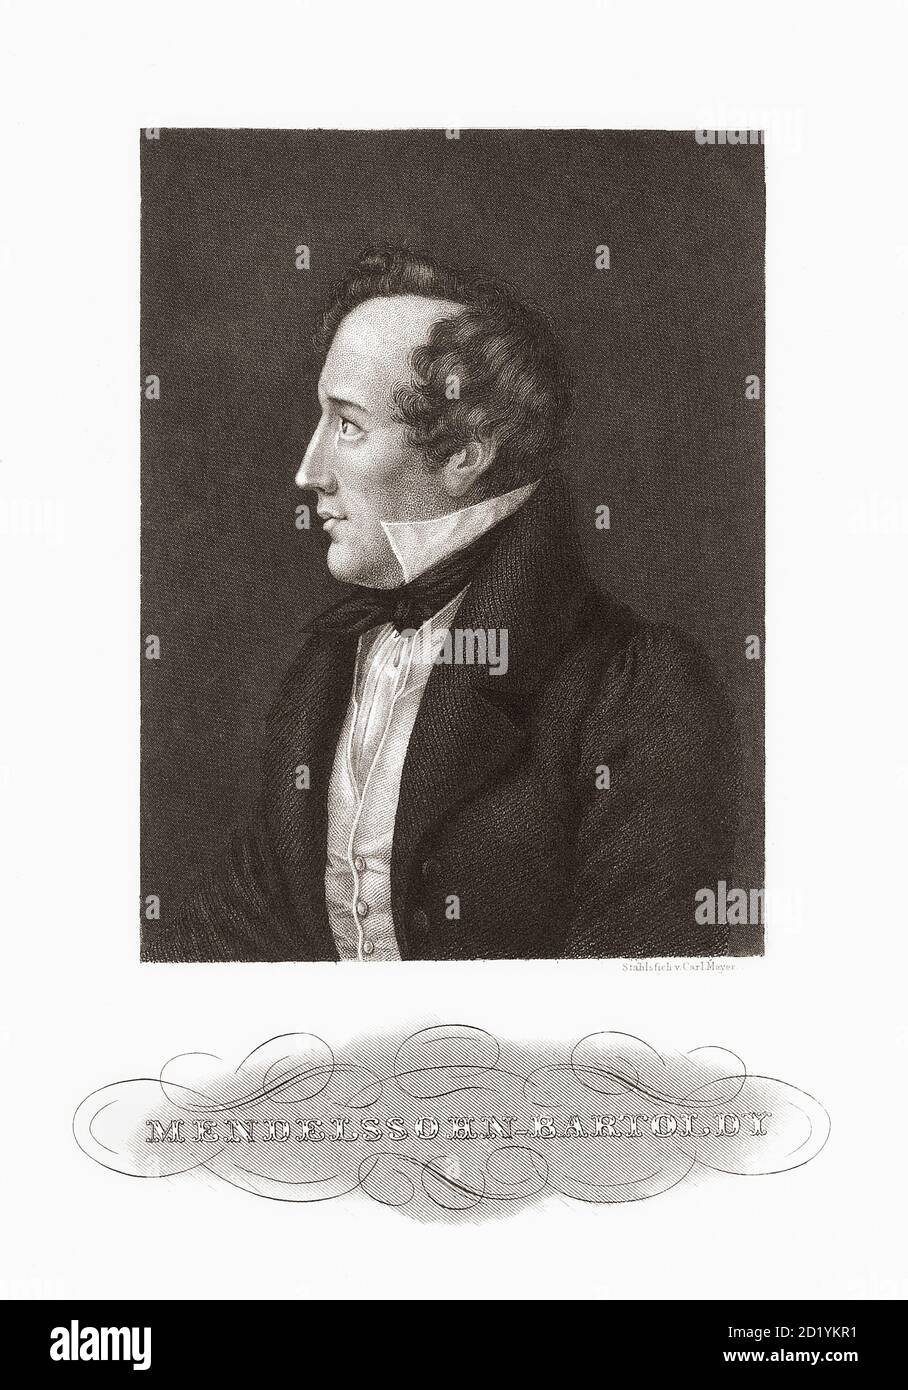 Jakob Ludwig Felix Mendelssohn Bartholdy, 1809 –1847, born as Felix Mendelssohn. German composer, pianist, organist and conductor of the early romantic period. Stock Photo